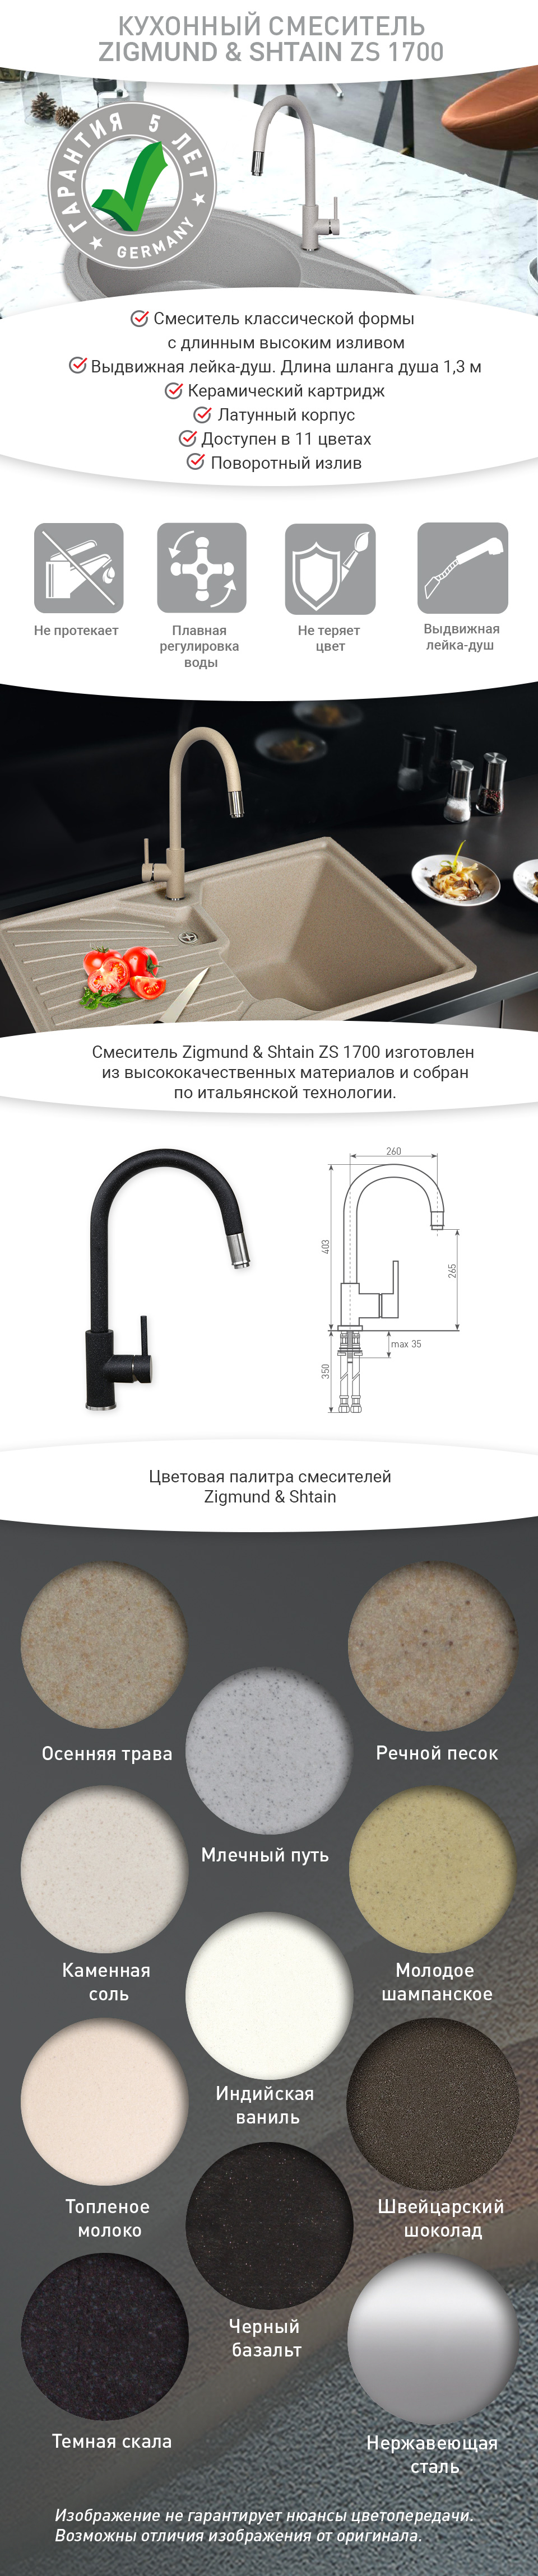 Смеситель Zigmund & Shtain ZS 1700 Топленое молоко